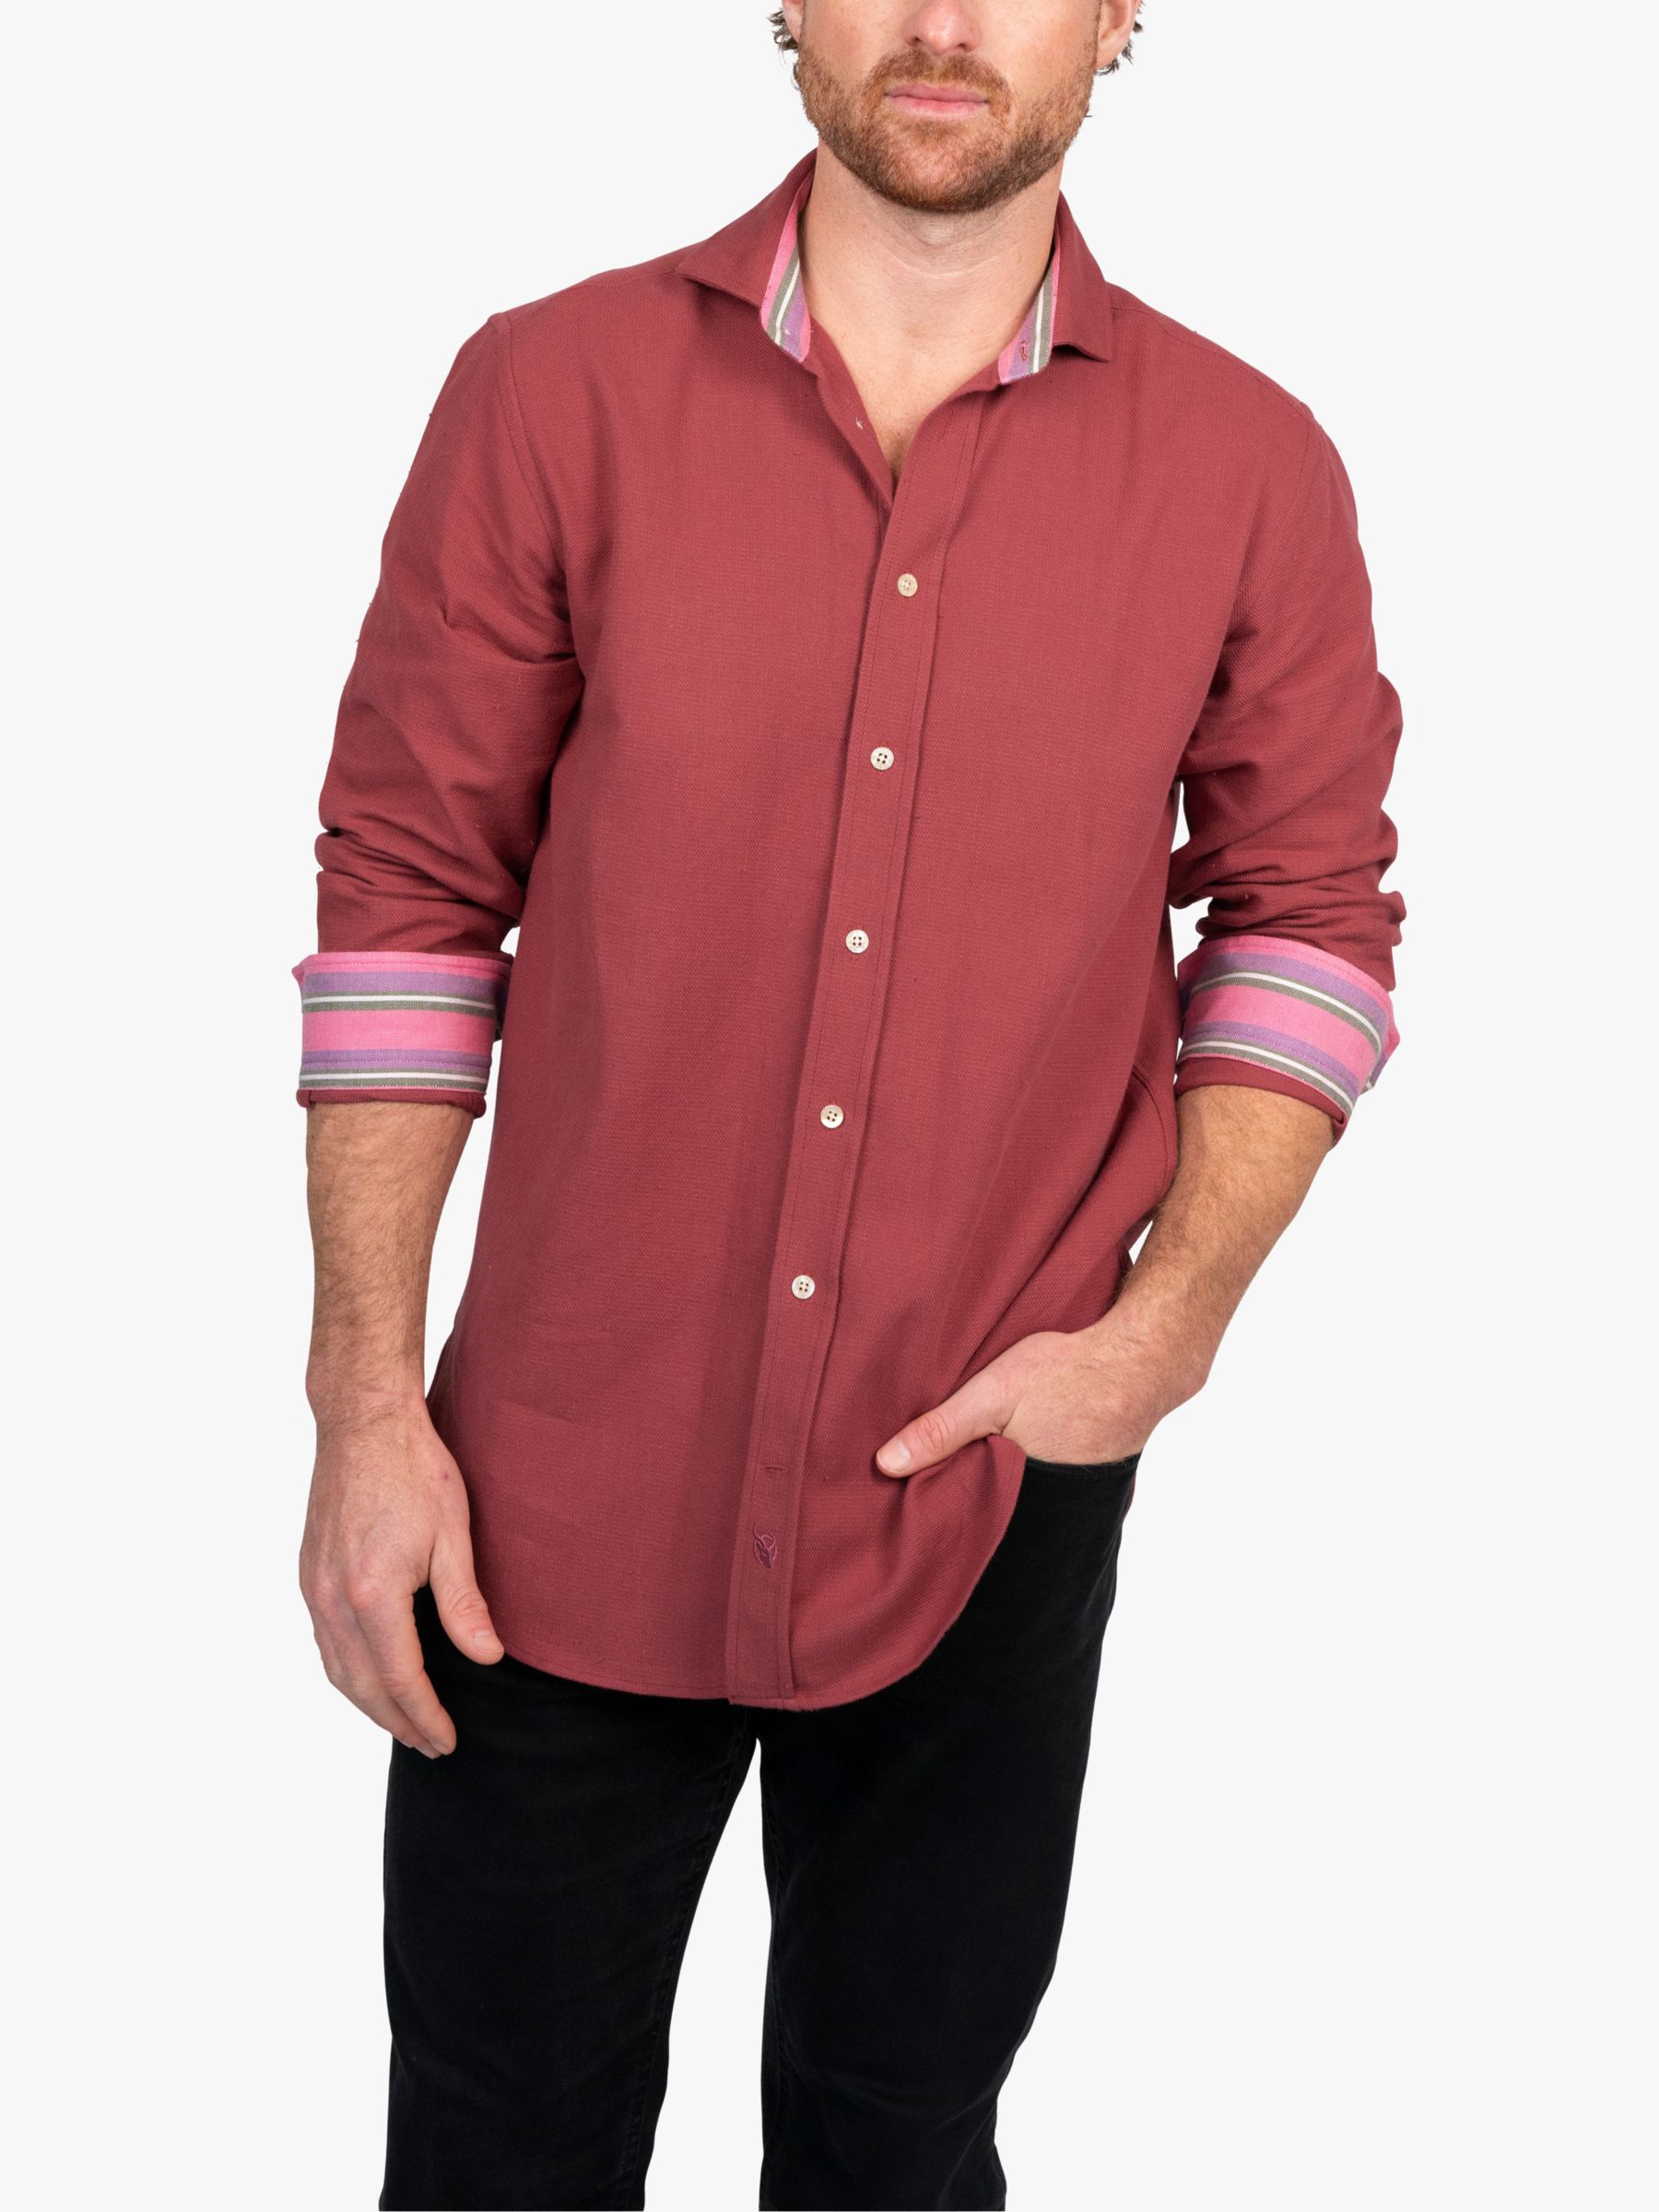 KOY Oxford Cotton Shirt, Orange Coral, S